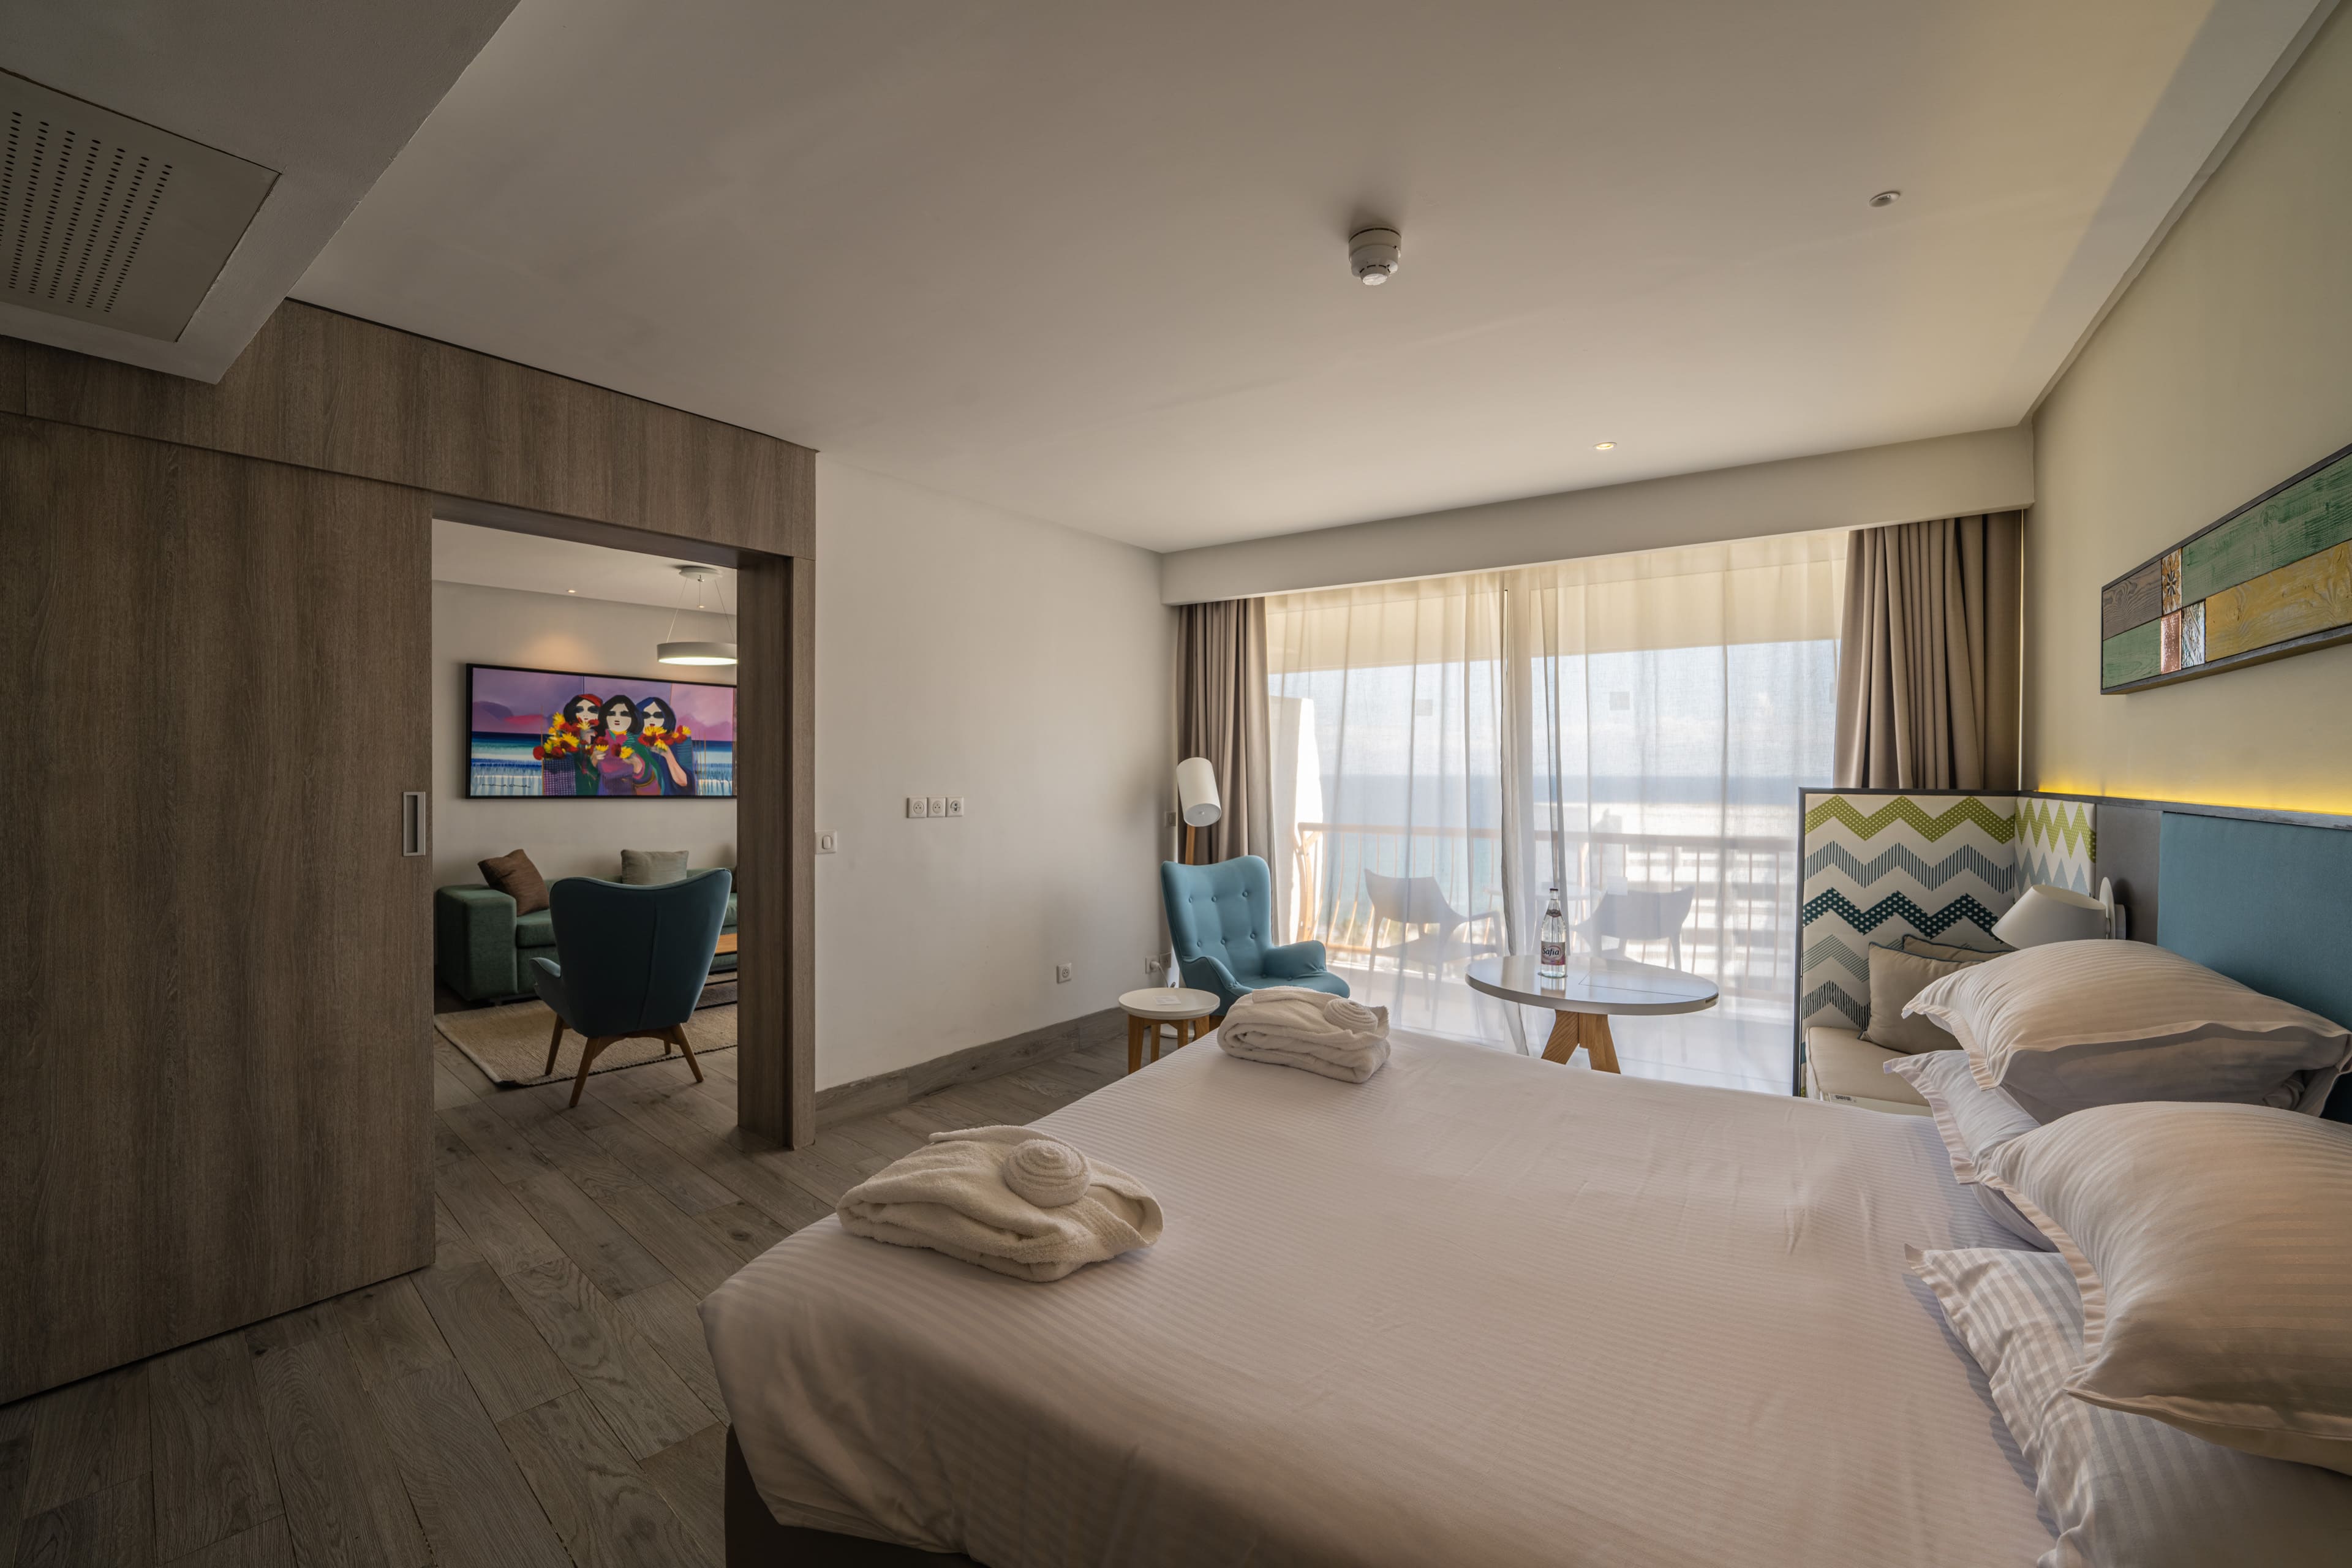 Sousse Pearl Marriott Resort & Spa